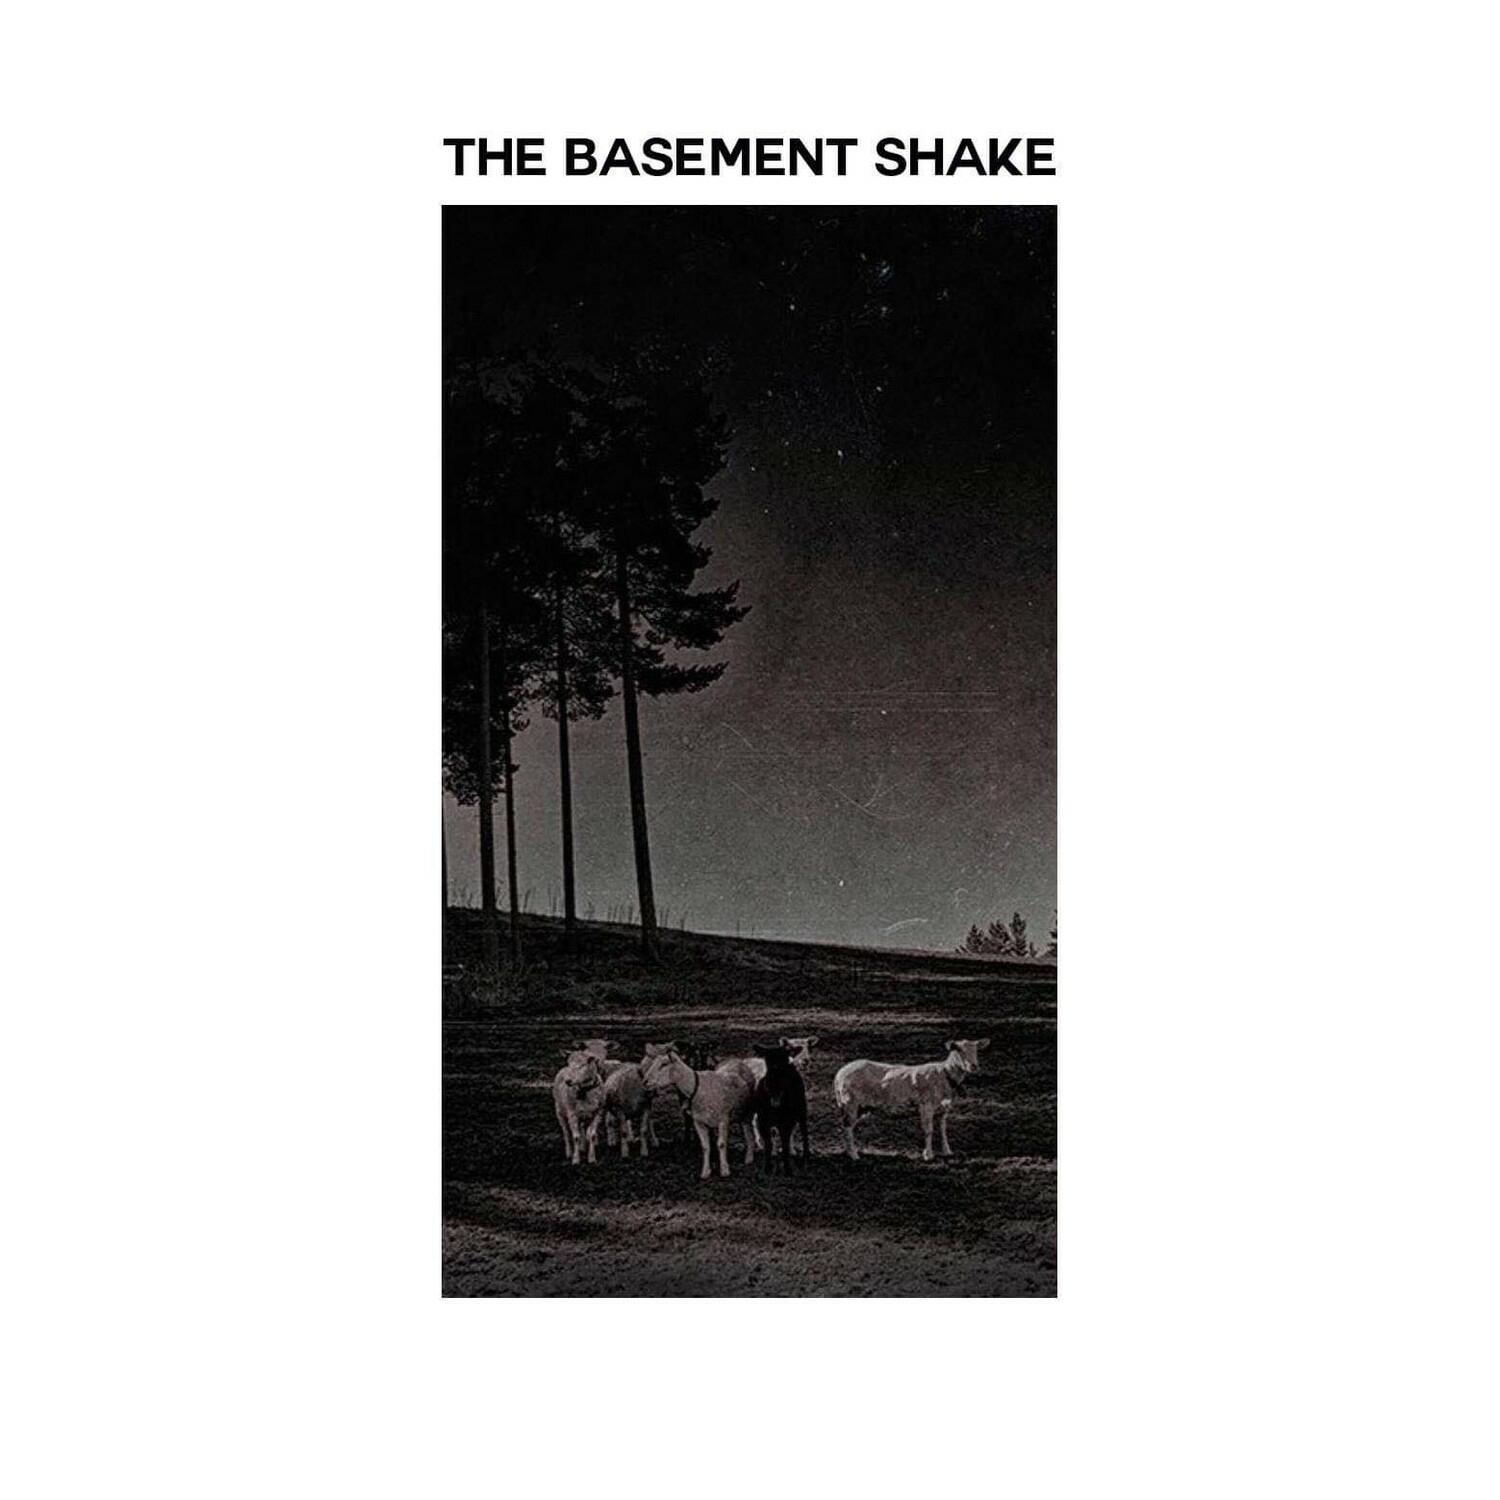 The Basement Shake